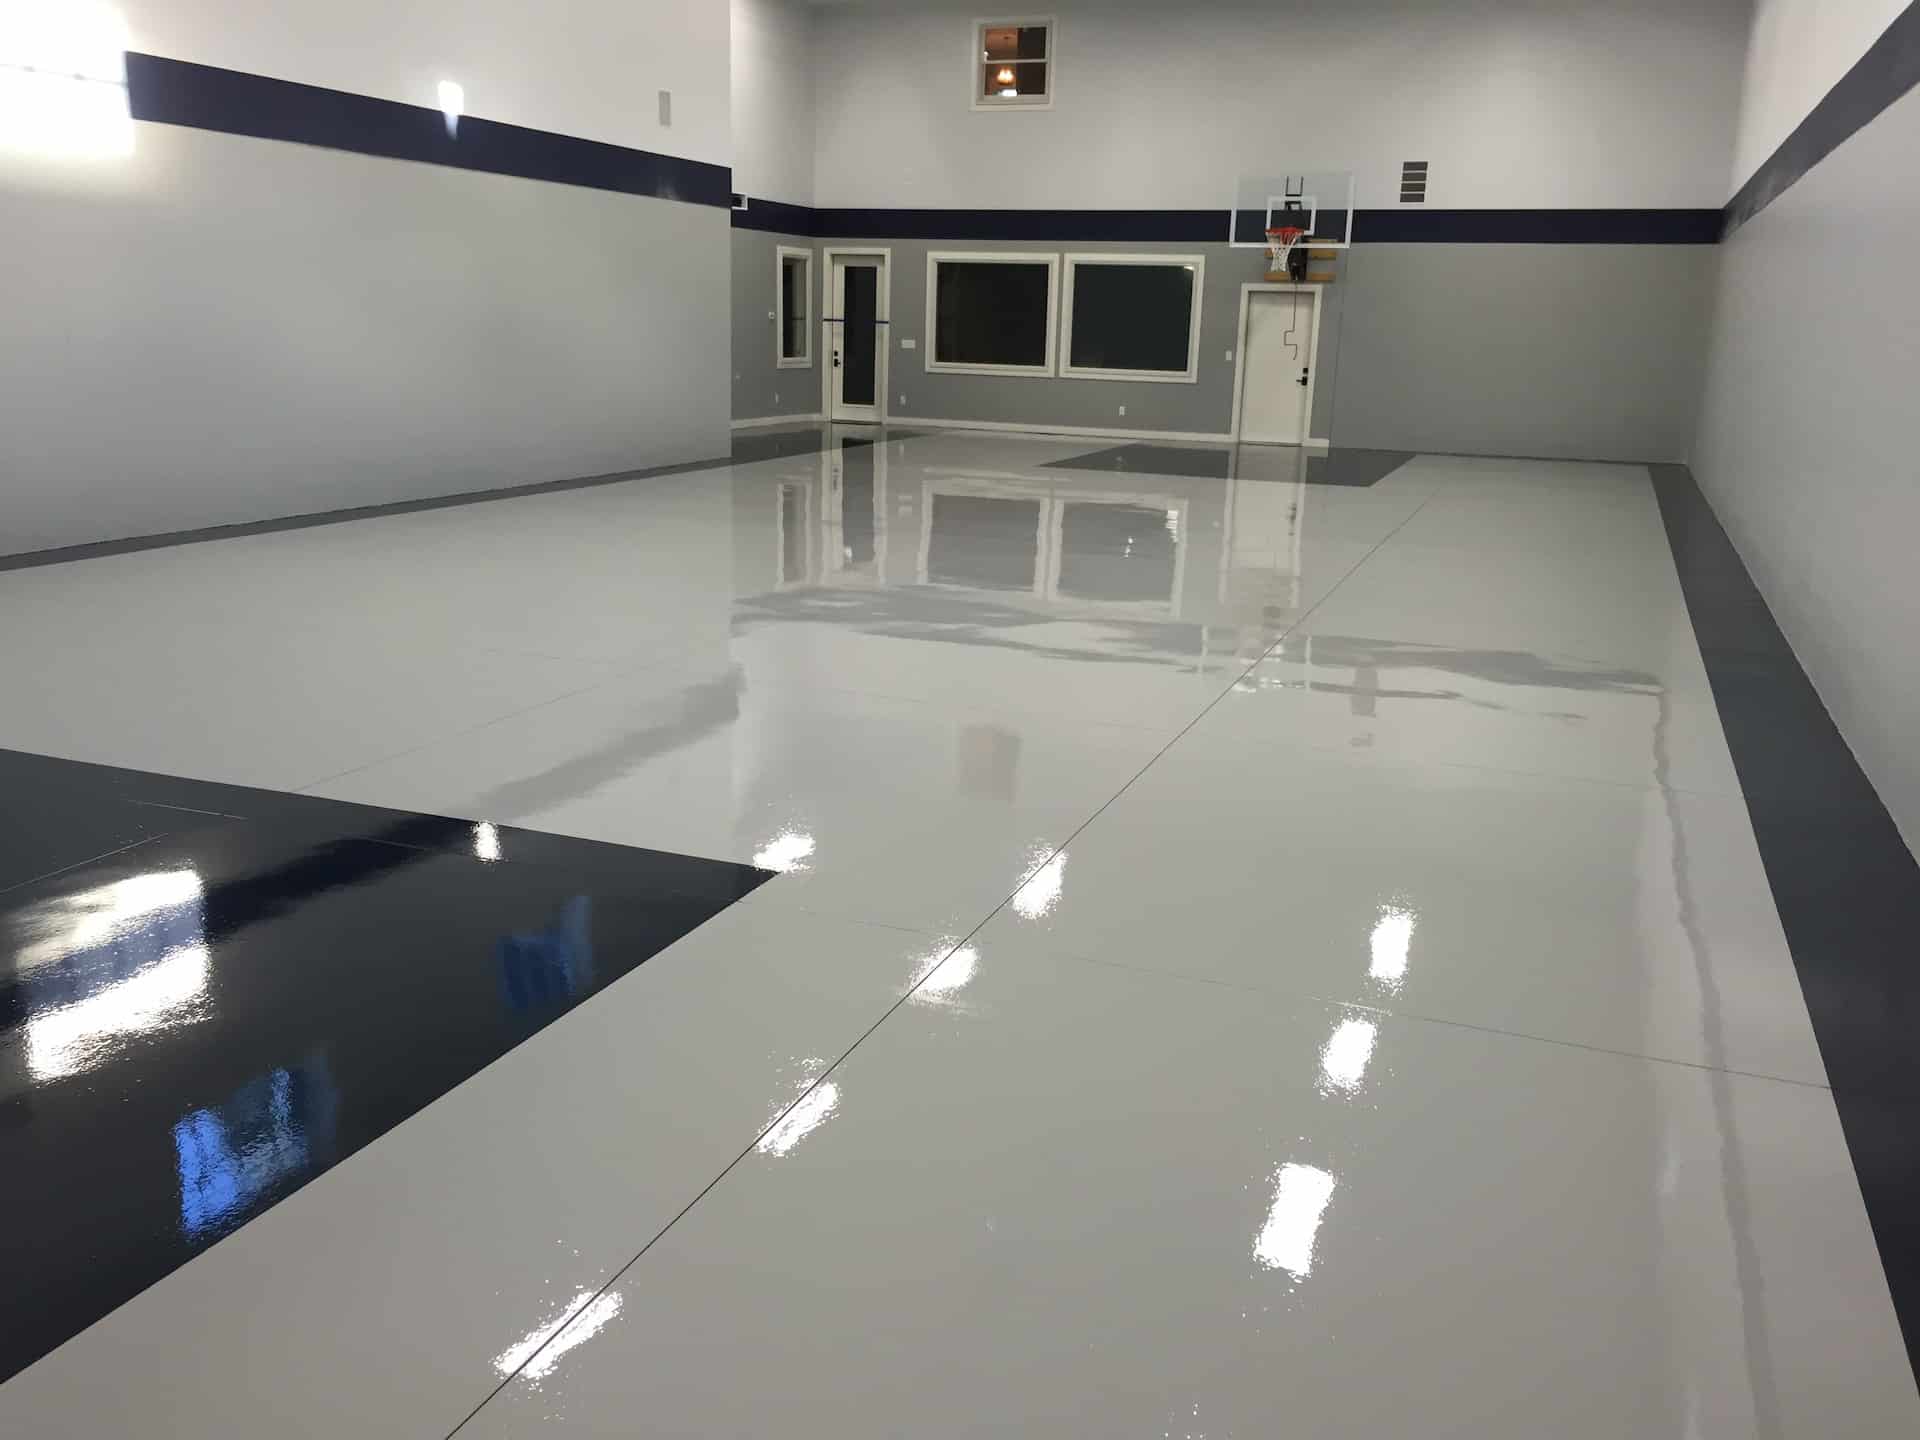 Epoxy flooring for indoor basketball court